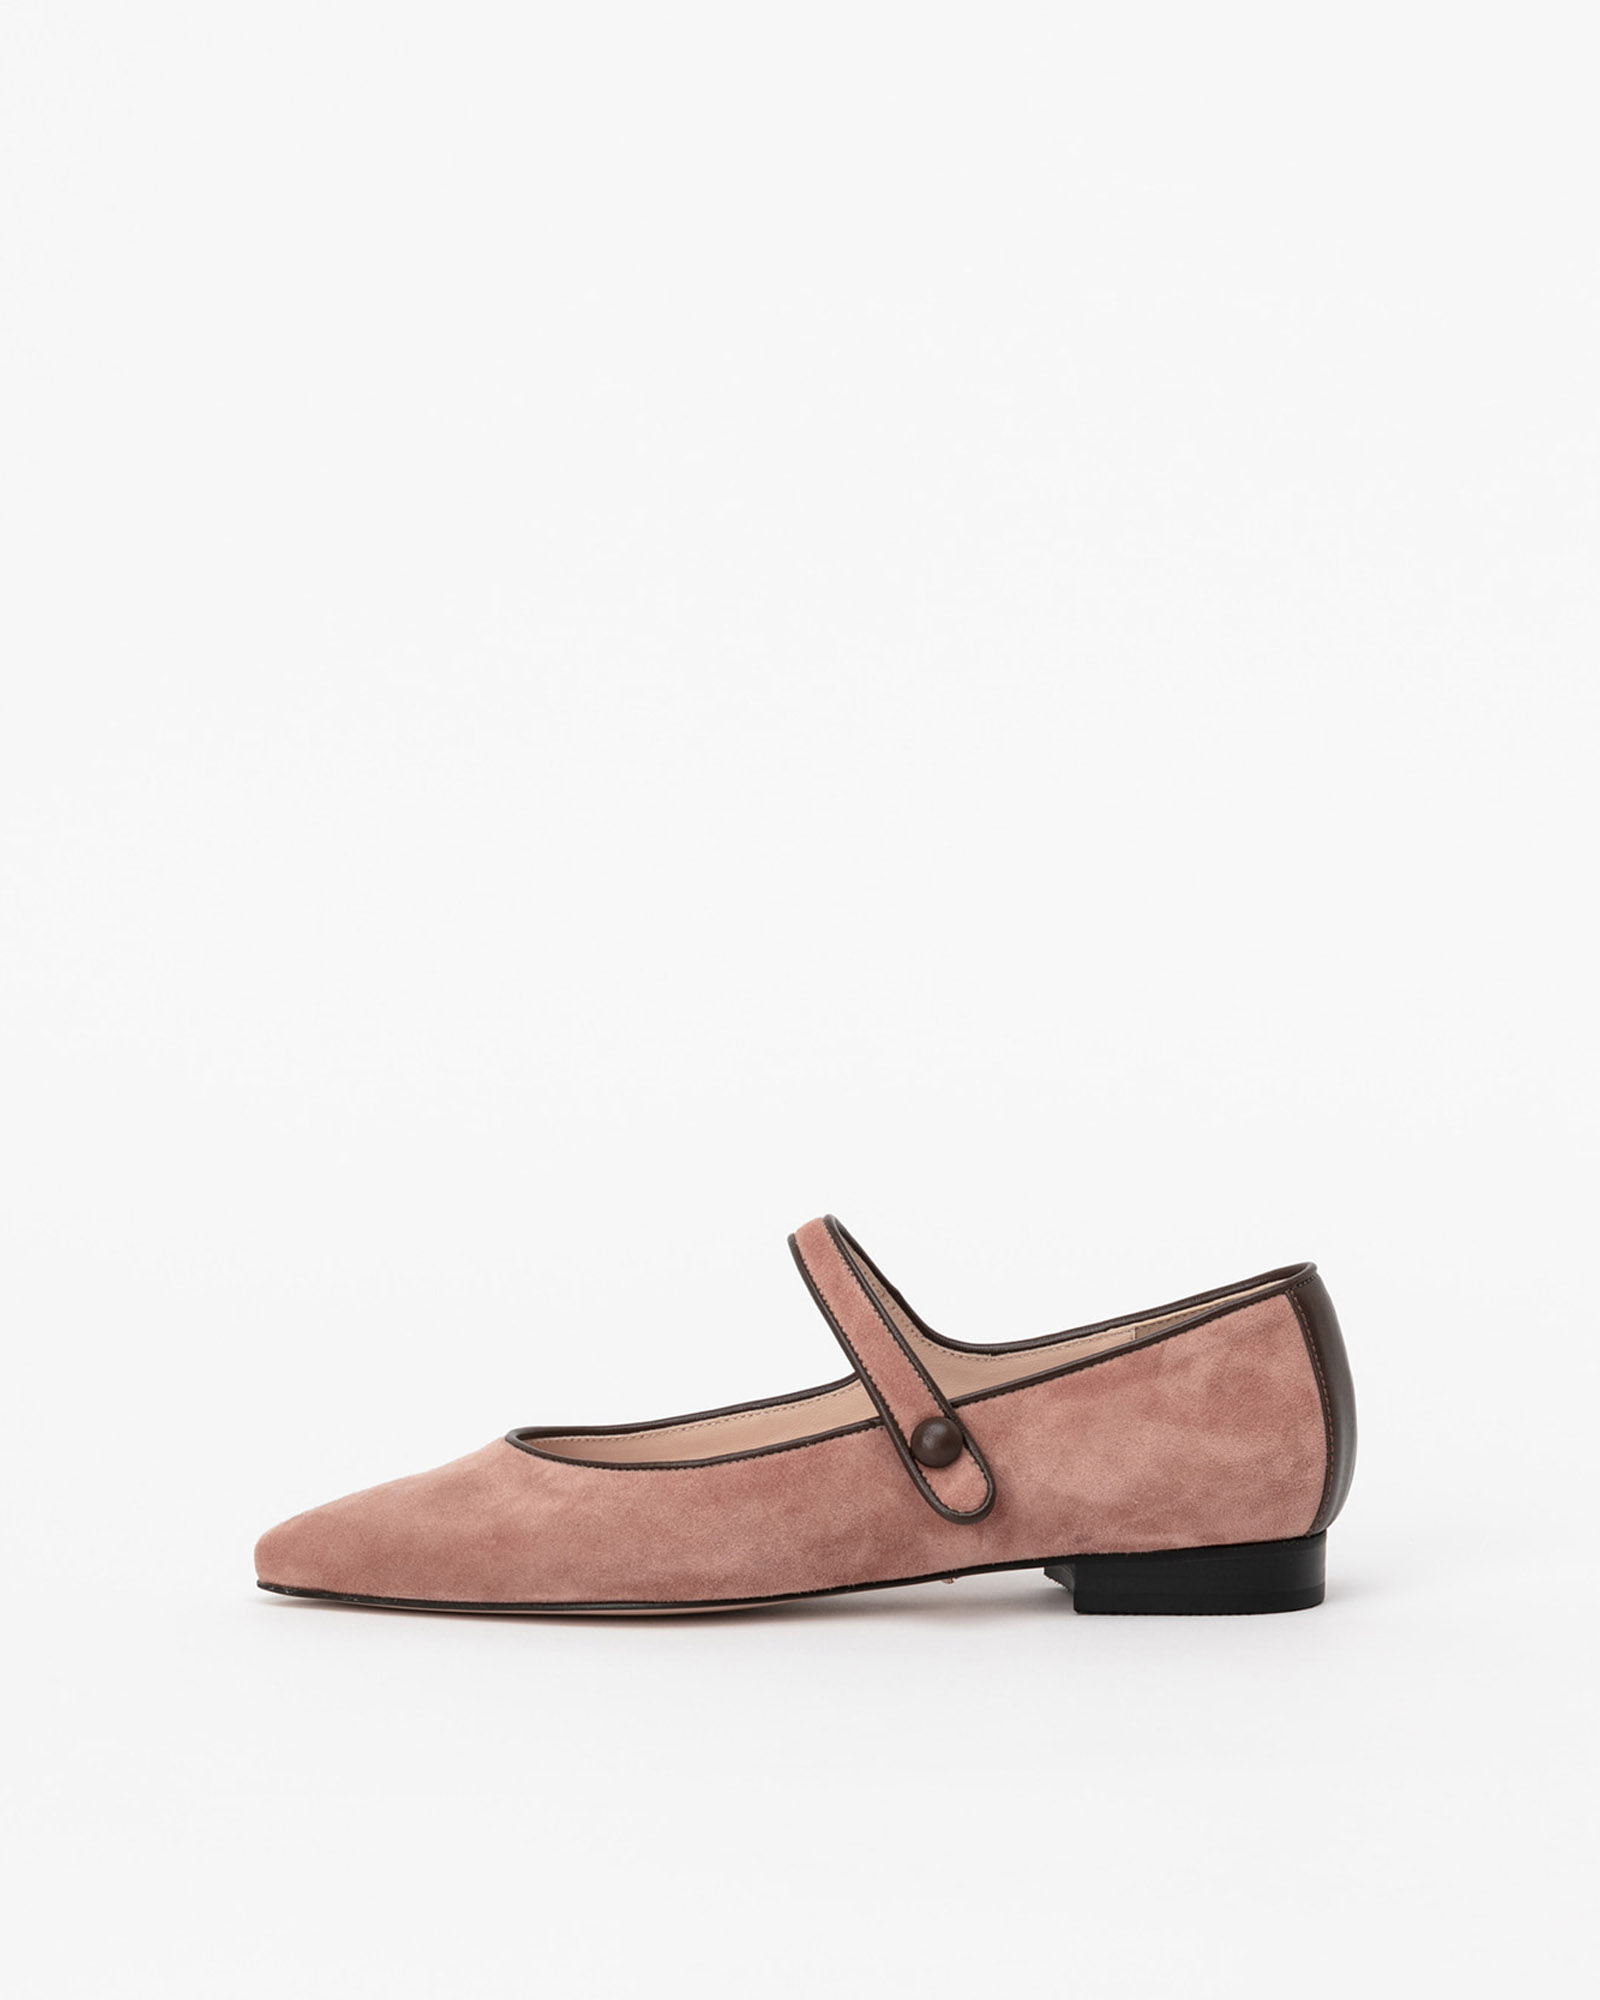 Loiretta Maryjane Flatshoes in Dark Pink Suede